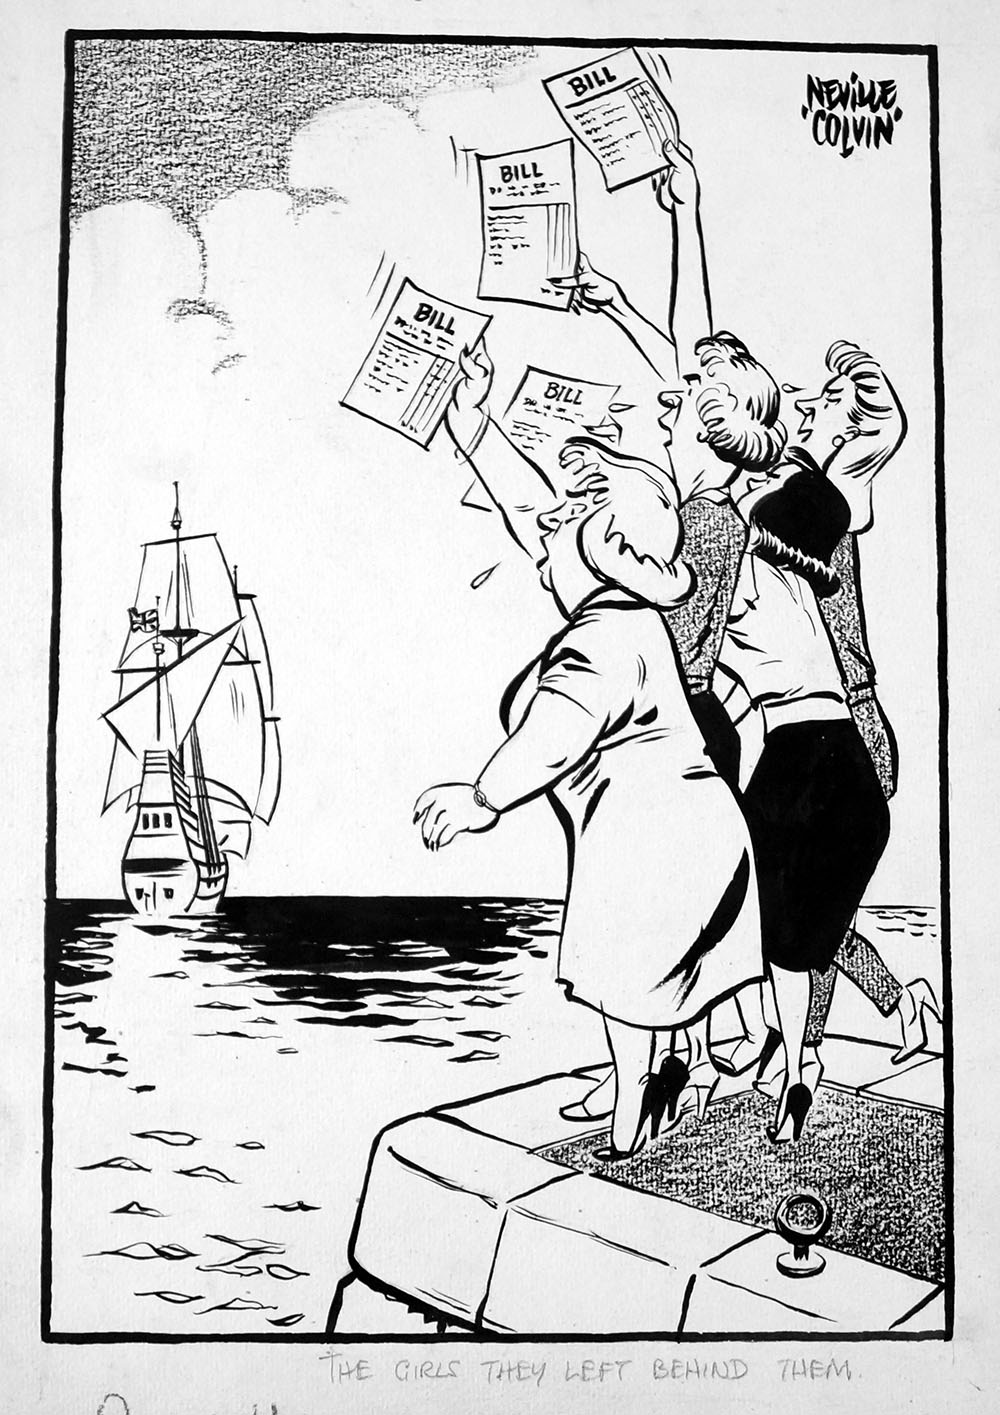 Mayflower (Original) (Signed) art by Newspaper Cartoons (Colvin) at The Illustration Art Gallery